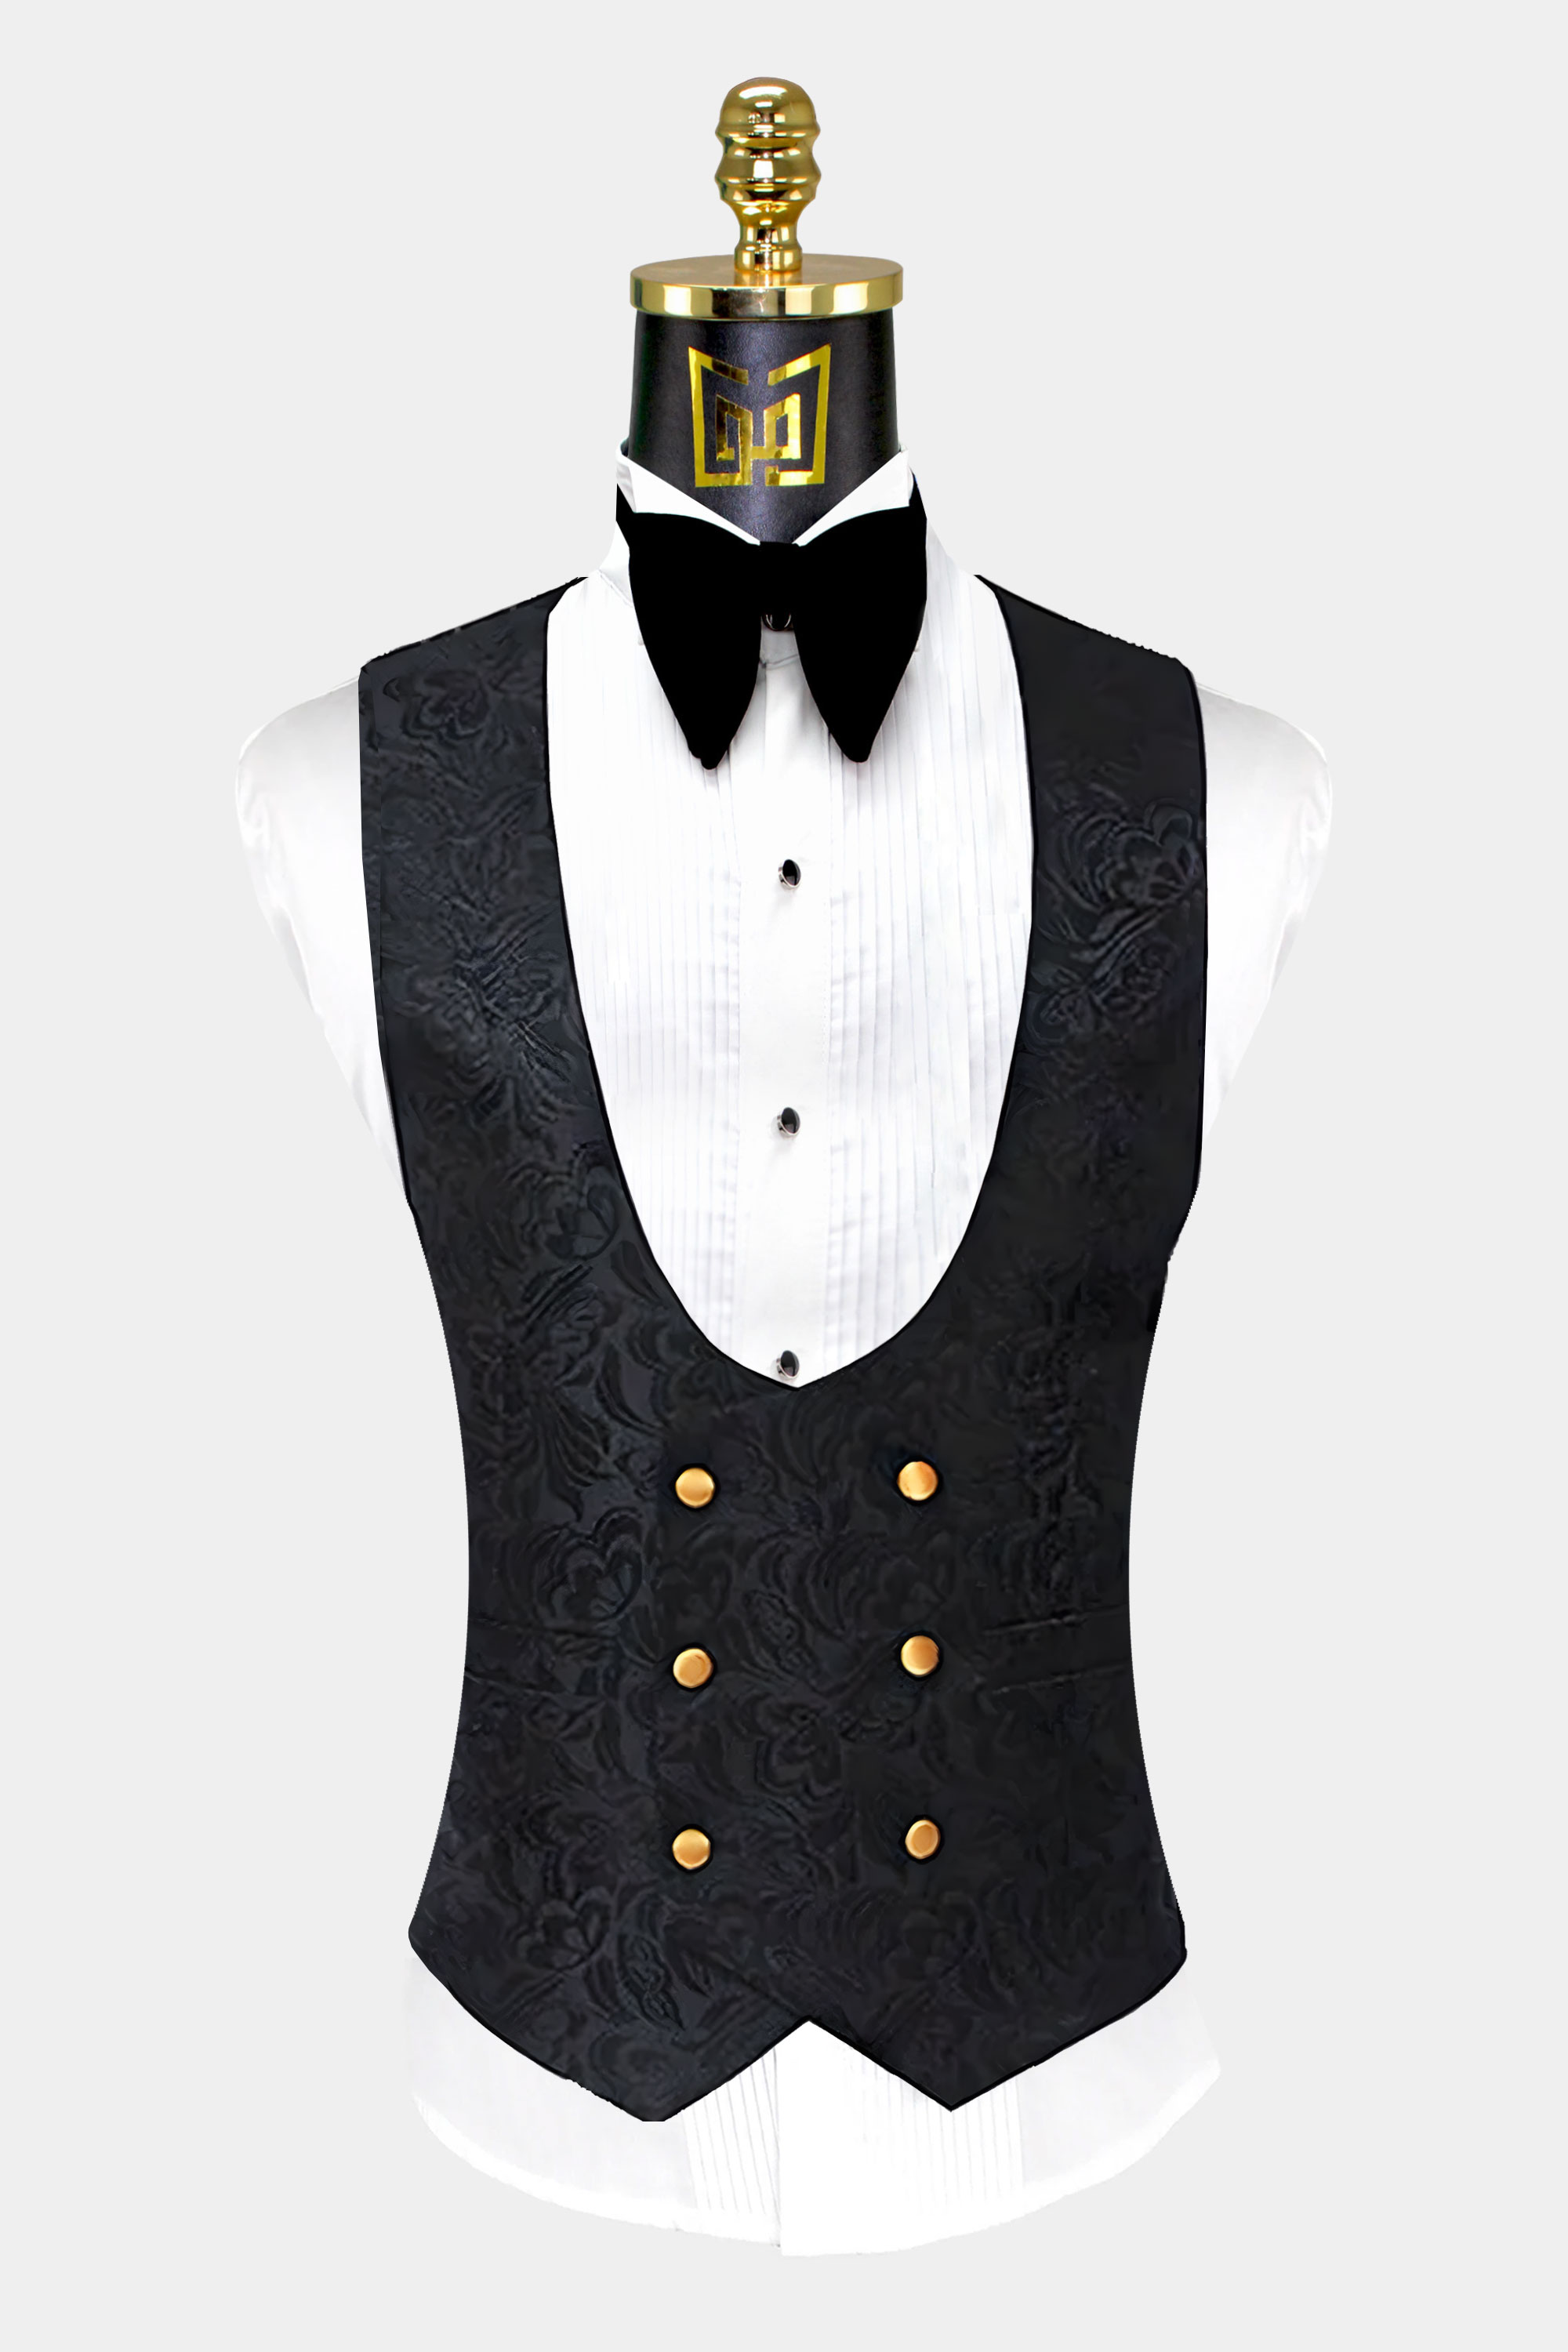 Black-Tuxedo-Vest-with-Gold-Trim-from-Gentlemansguru.com